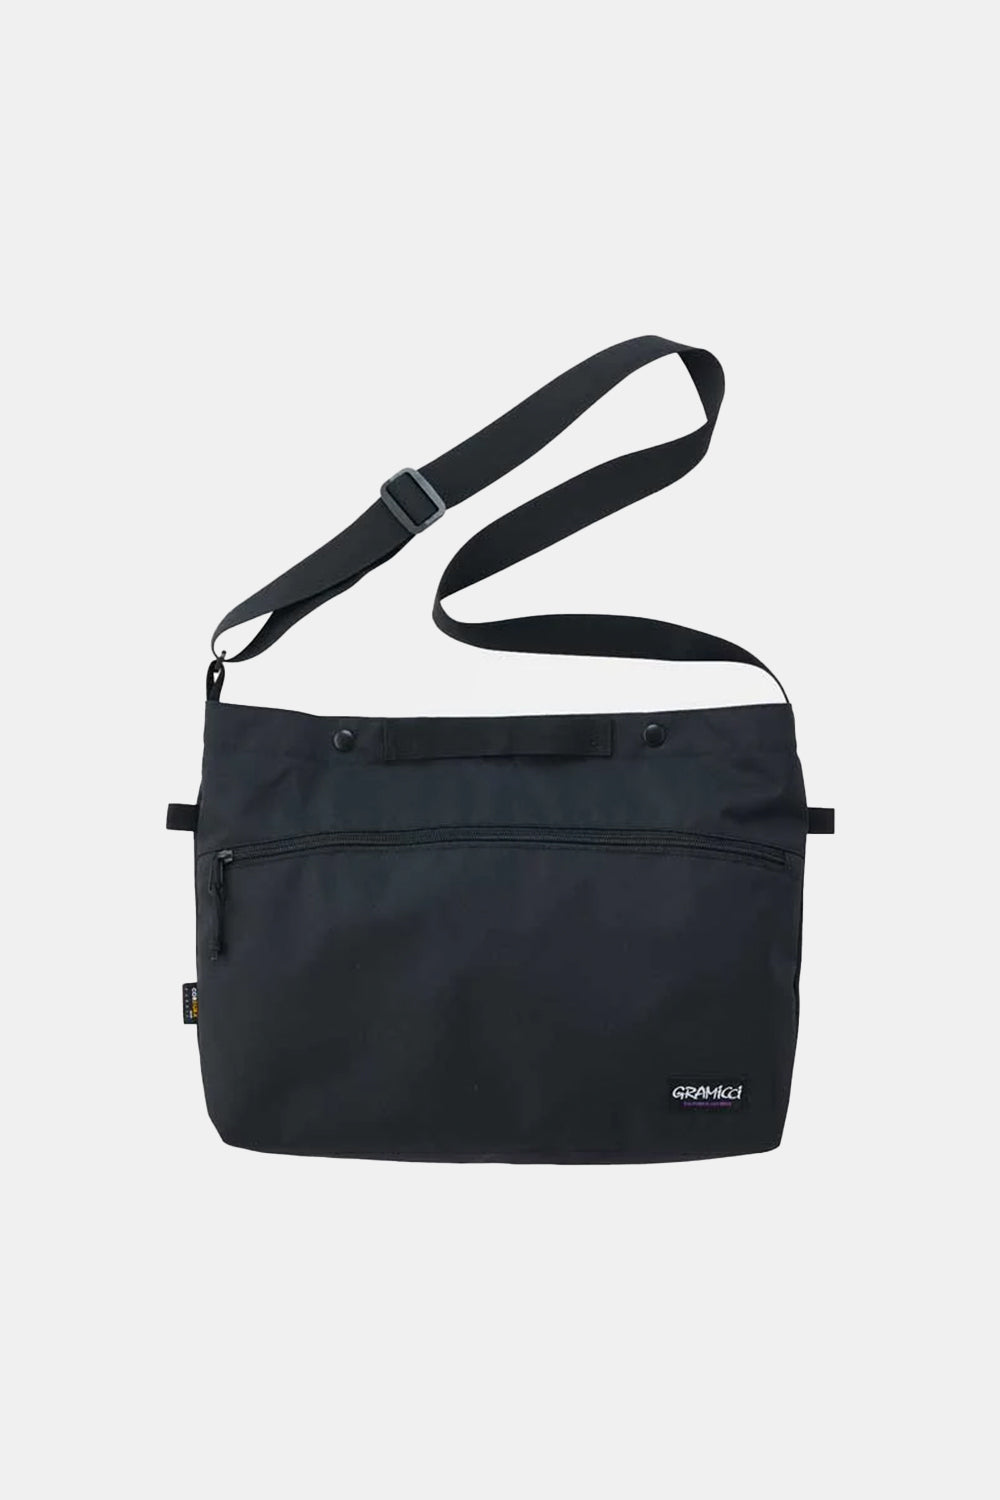 Gramicci Cordura Carrier Bag (Black)